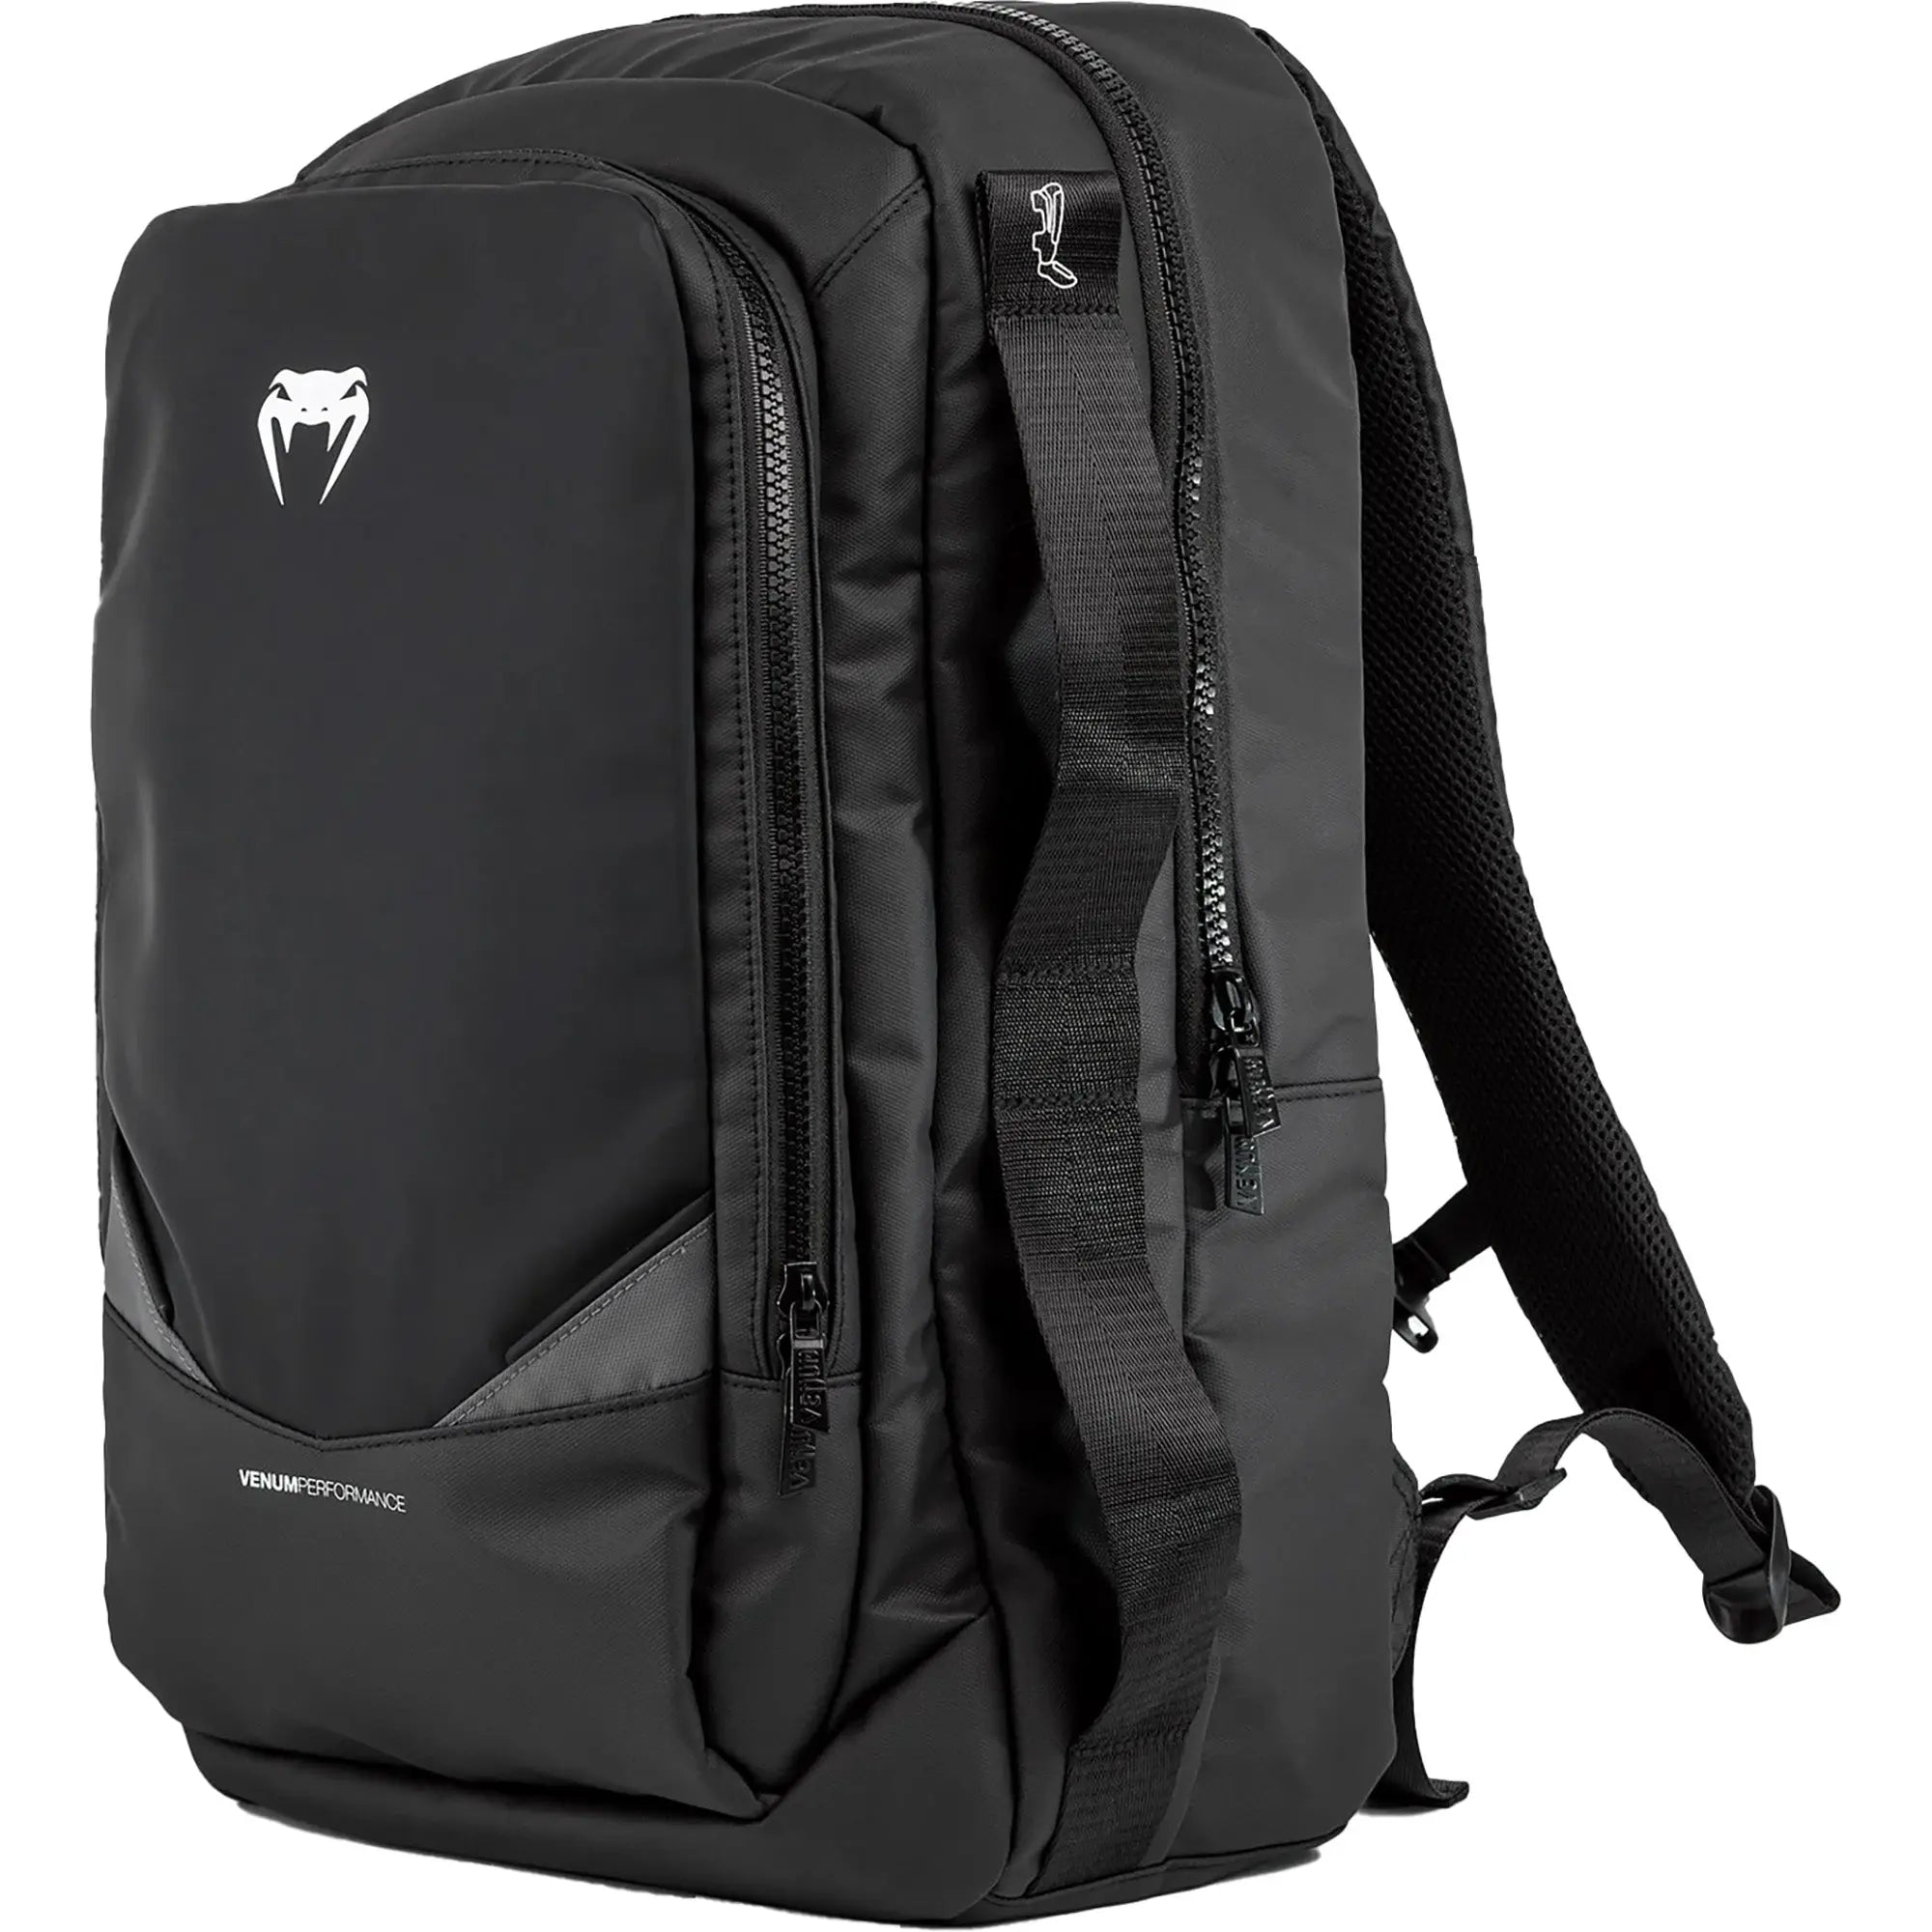 Venum Evo 2 Gym Backpack - Black/Gray Venum